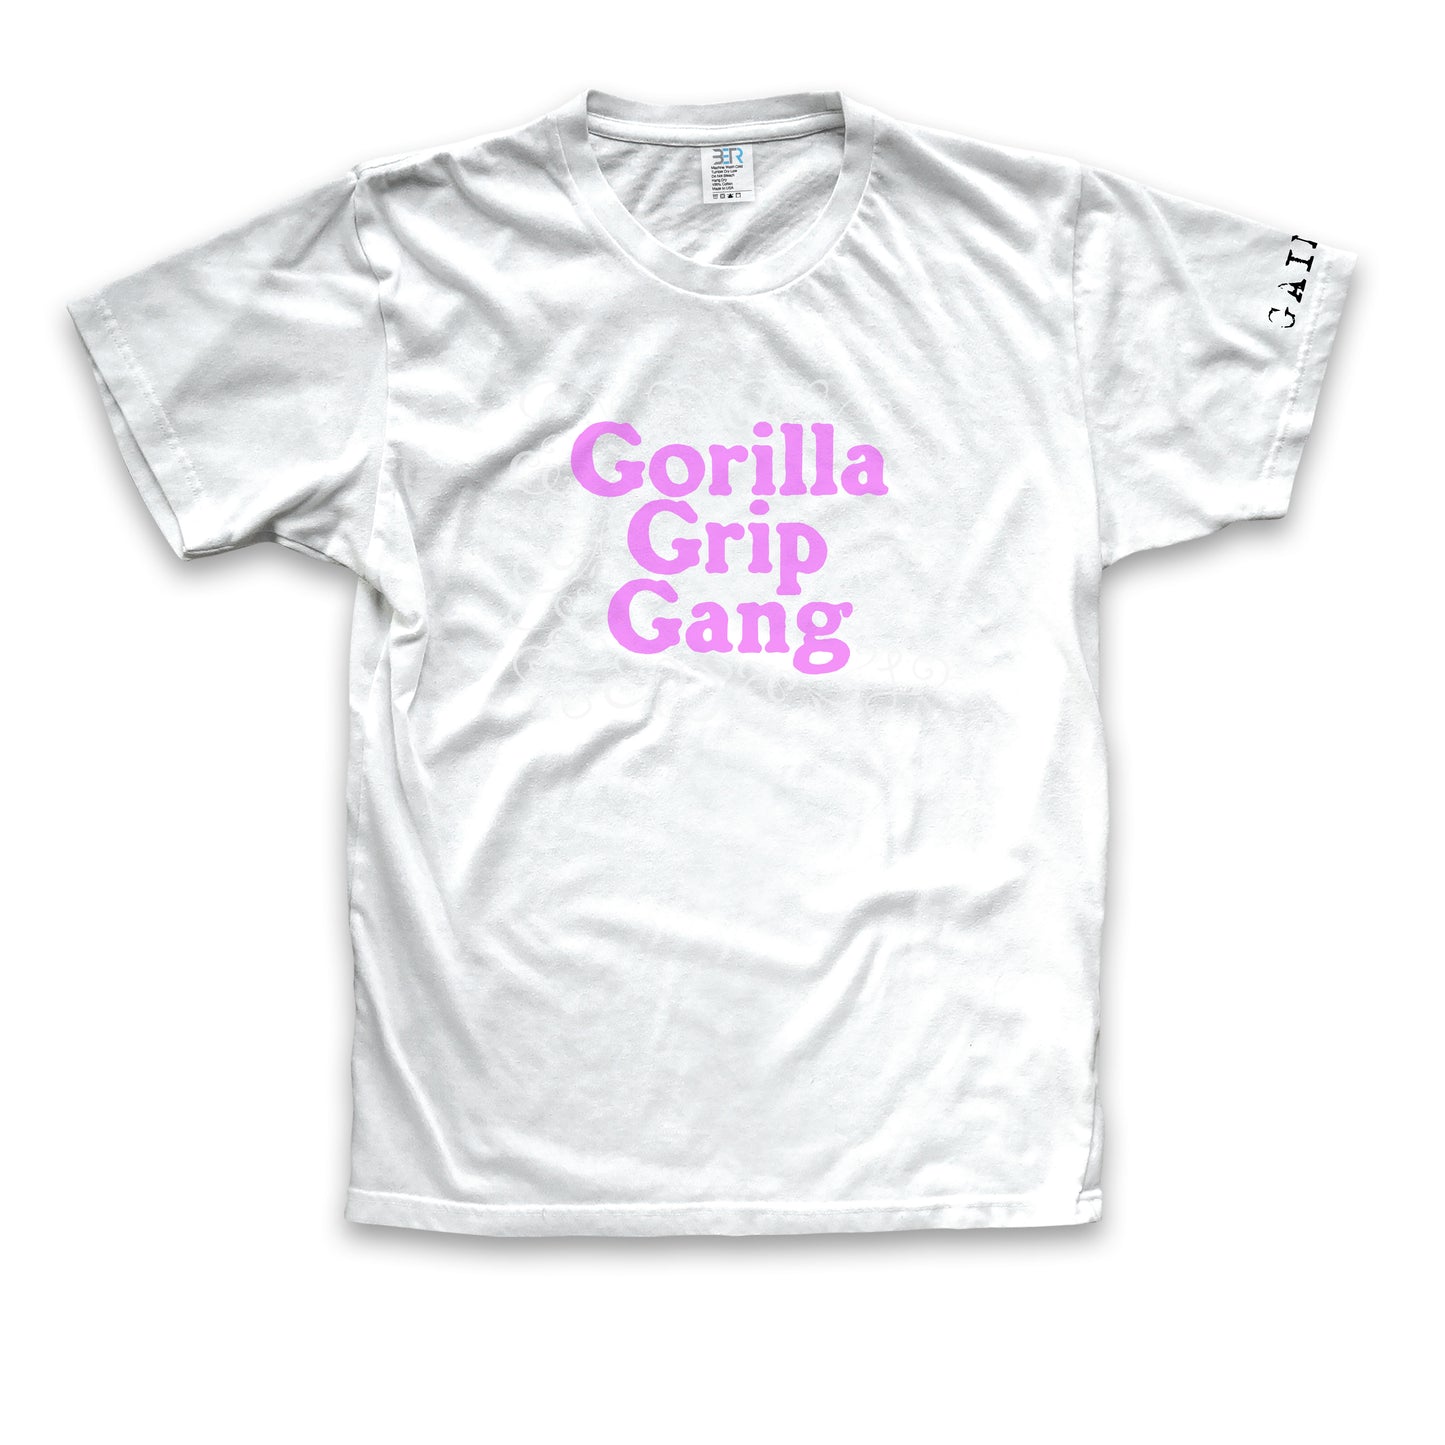 Gorilla Grip Gang tee